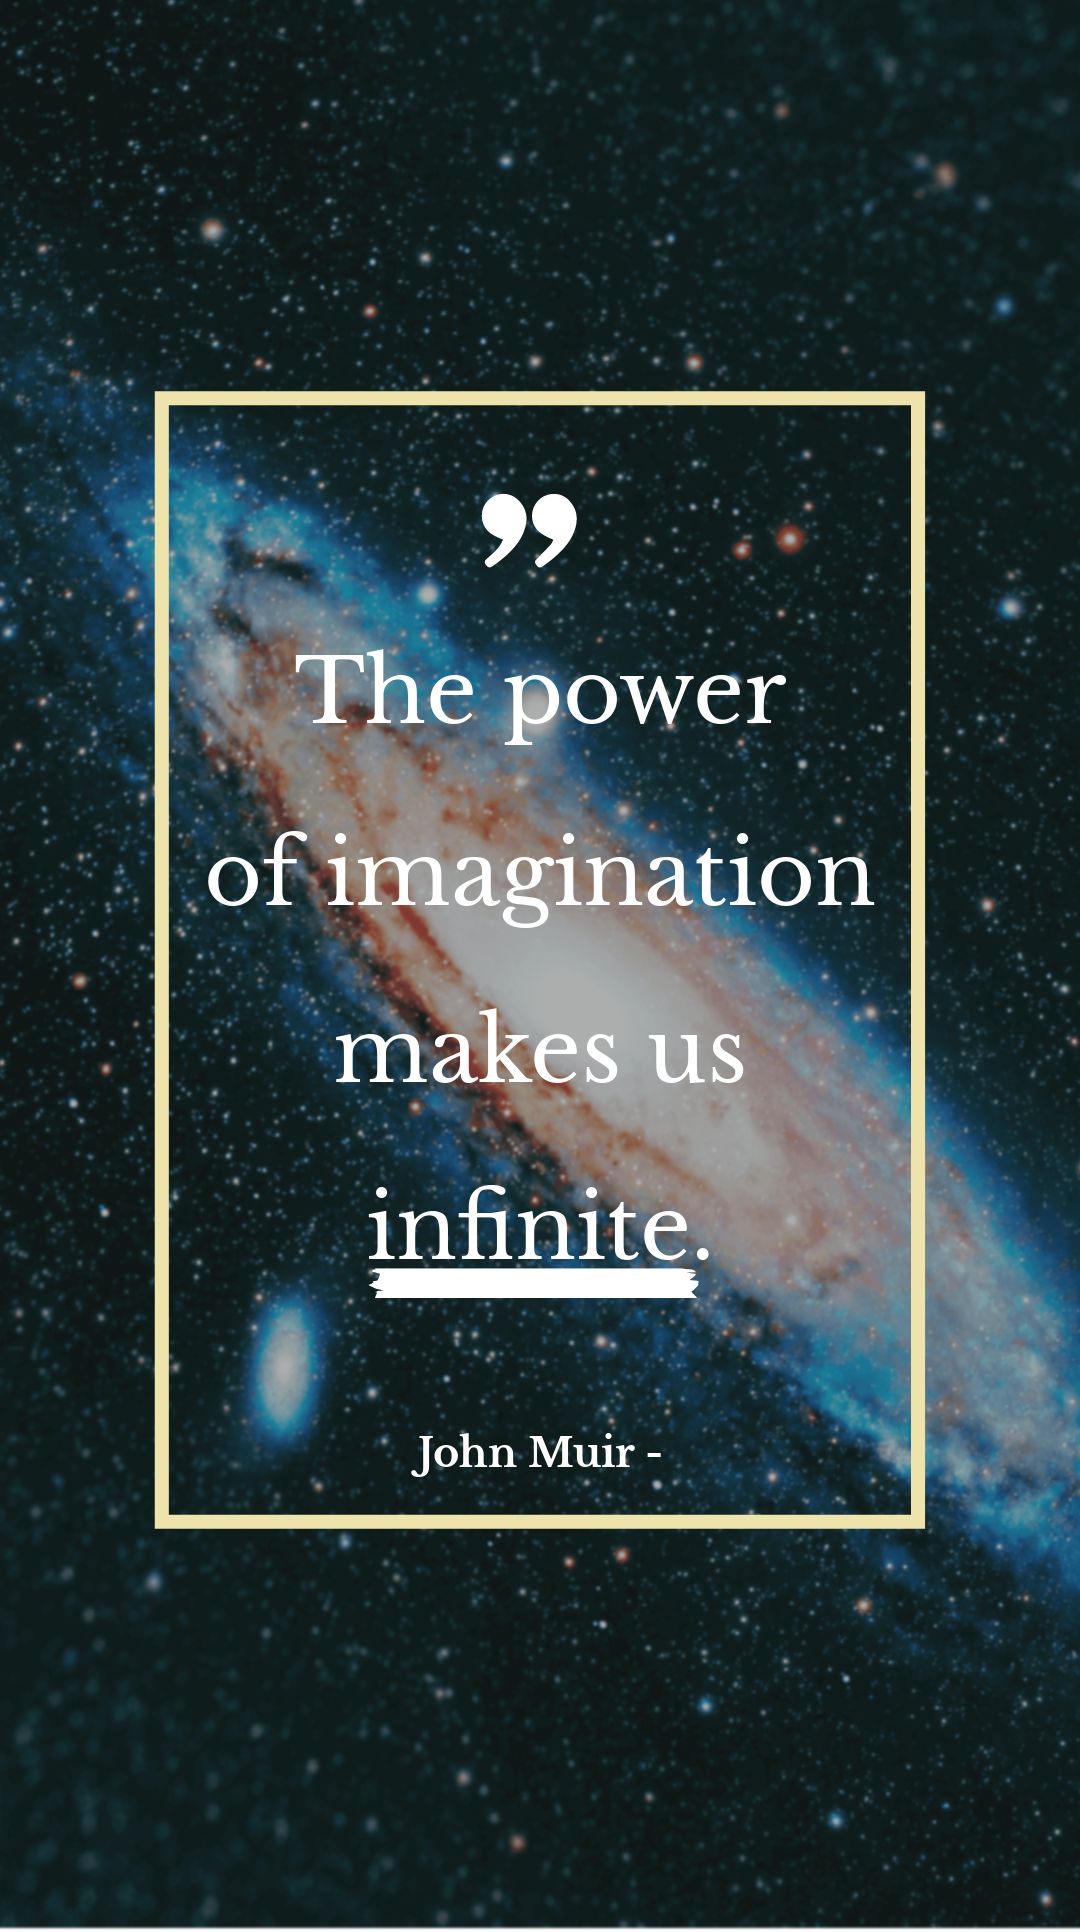 John Muir - The power of imagination makes us infinite.